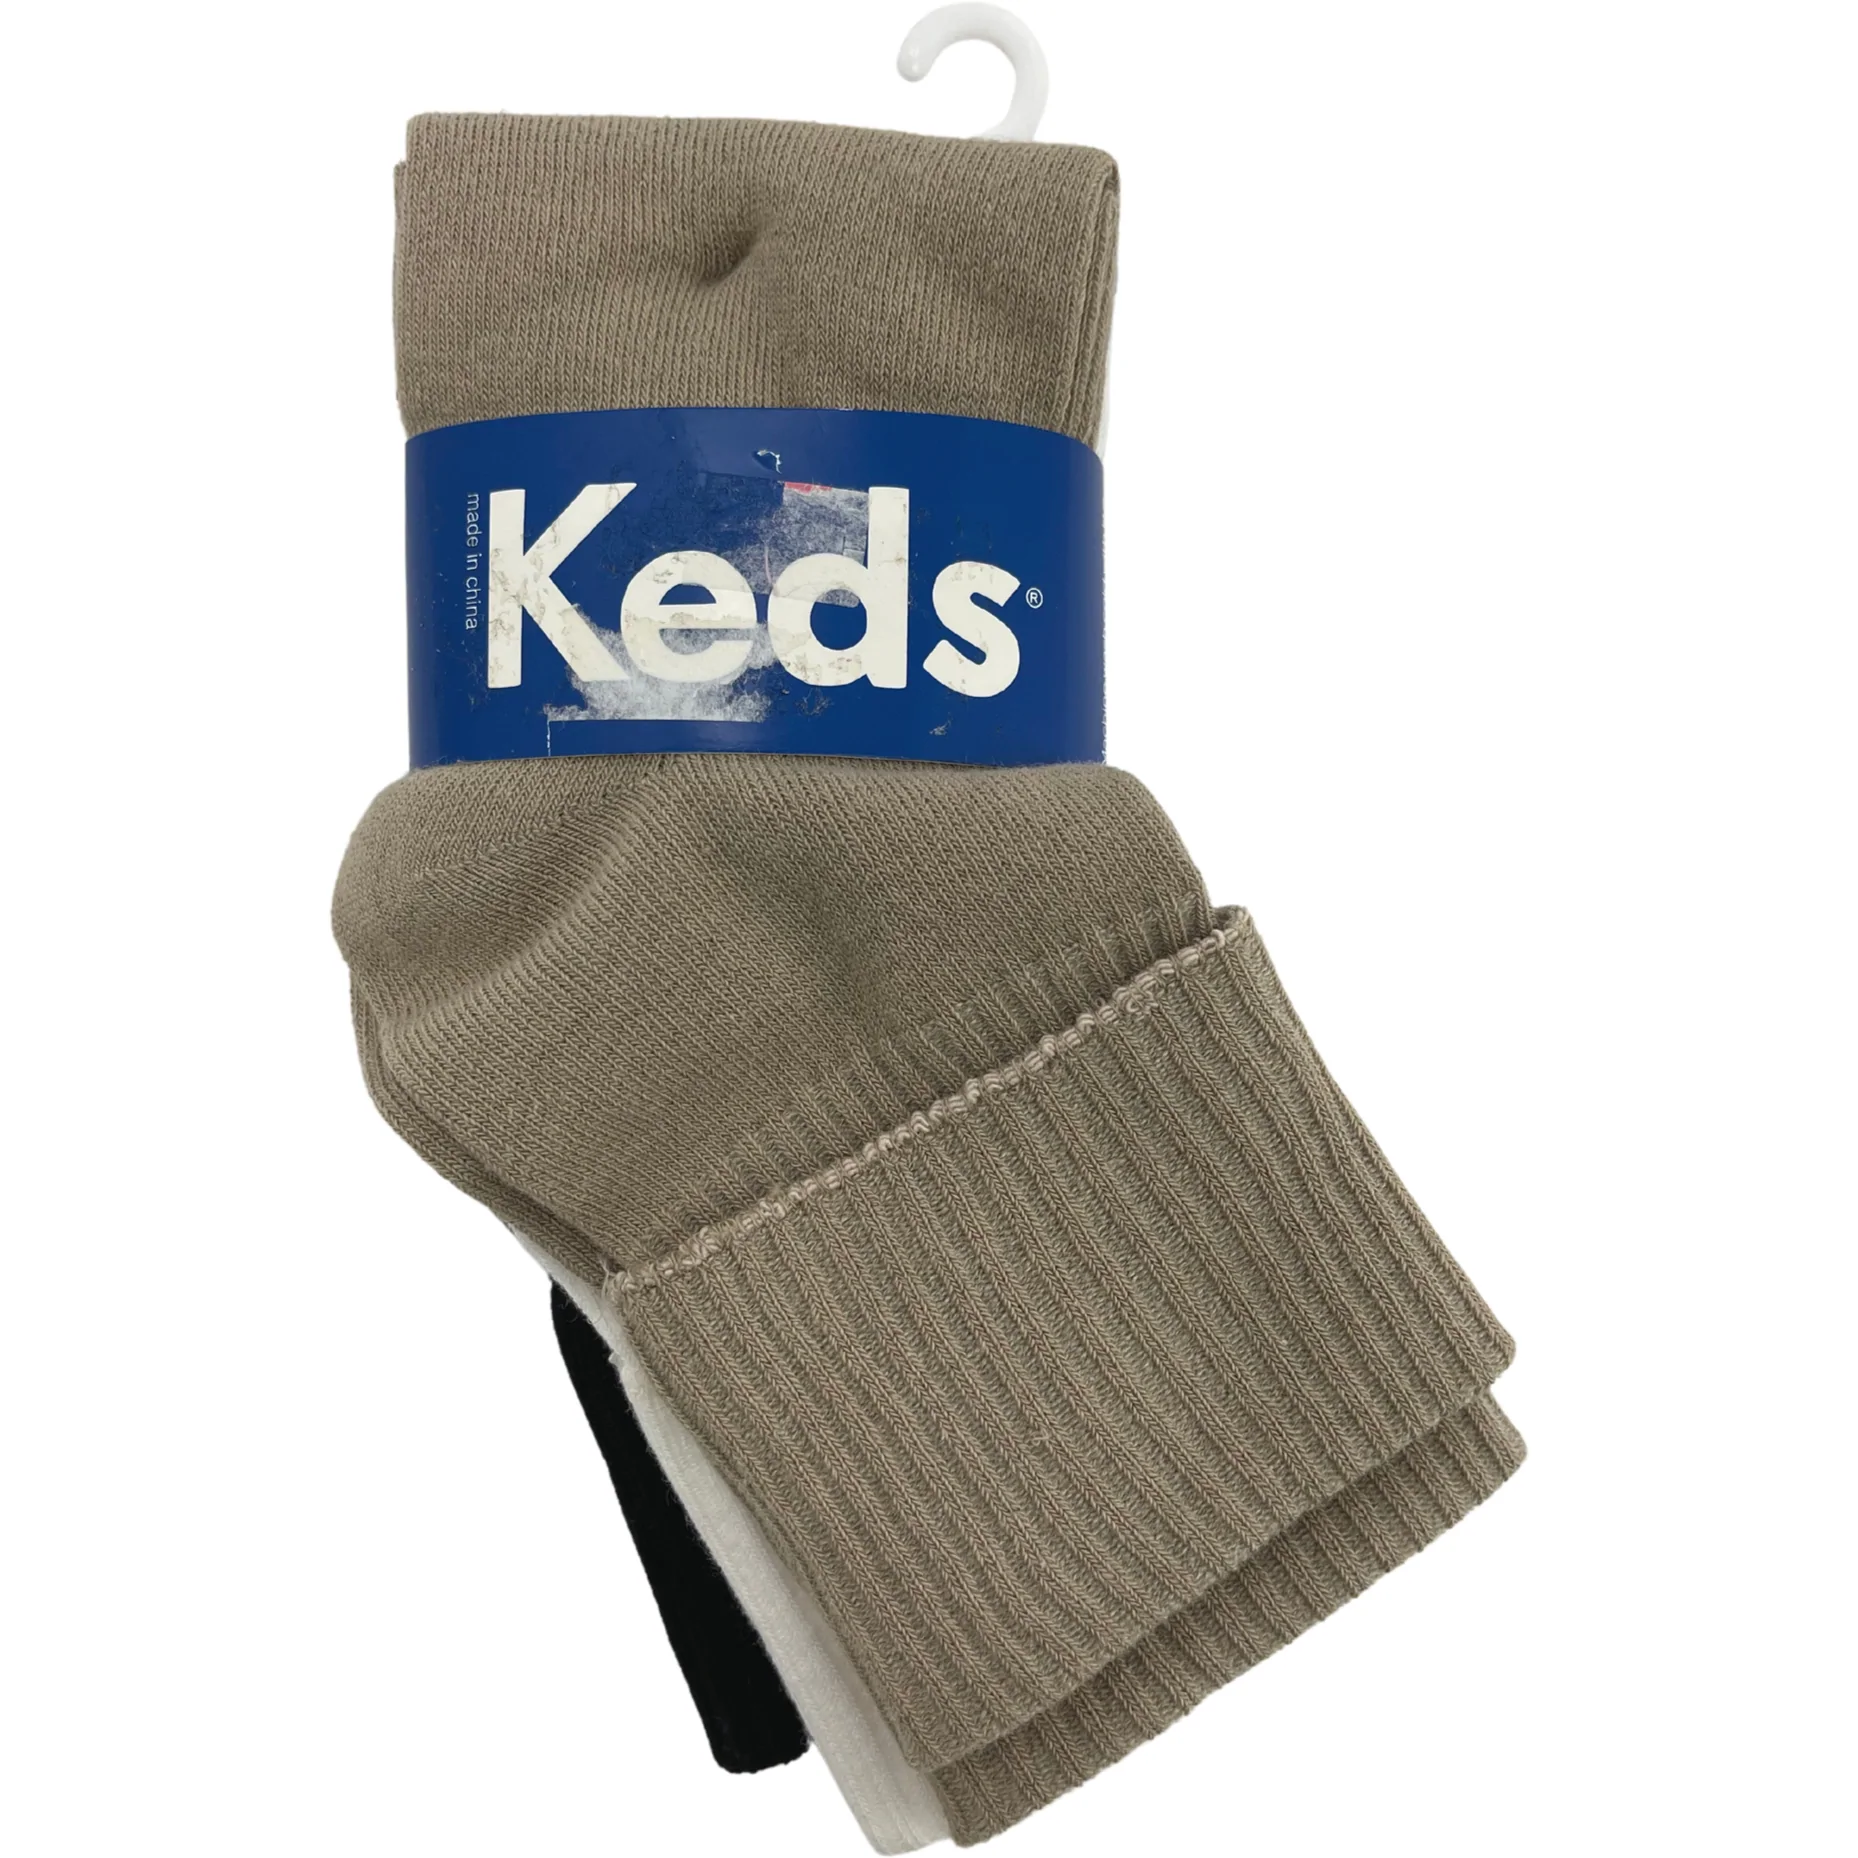 Keds Women's Socks / Cuff Socks / 3 Pairs / Neutral Colours **No Tags**